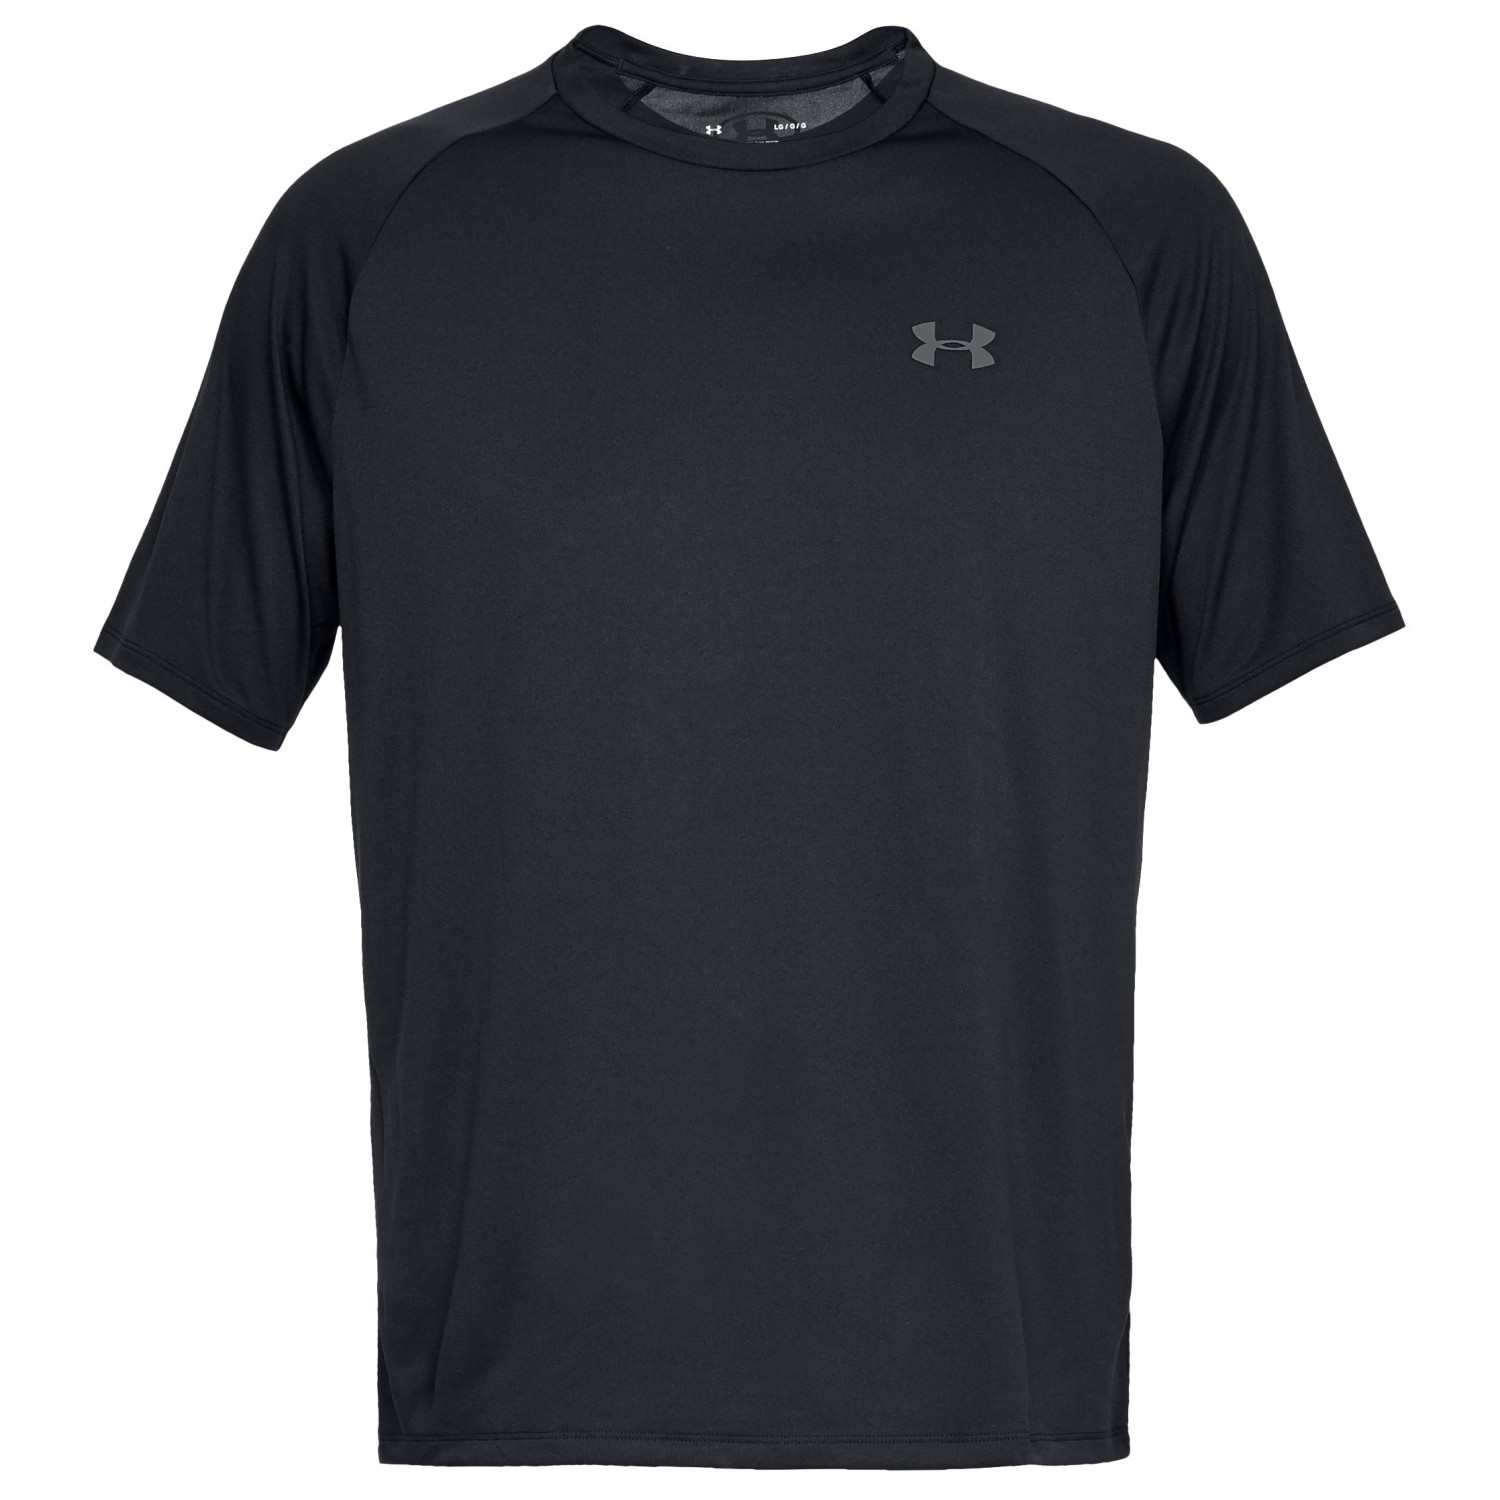 Функциональная рубашка Under Armour UA Tech S/S Tee, черный колготки для бега under armour women s ua fly fast 3 0 ankle цвет black black reflective